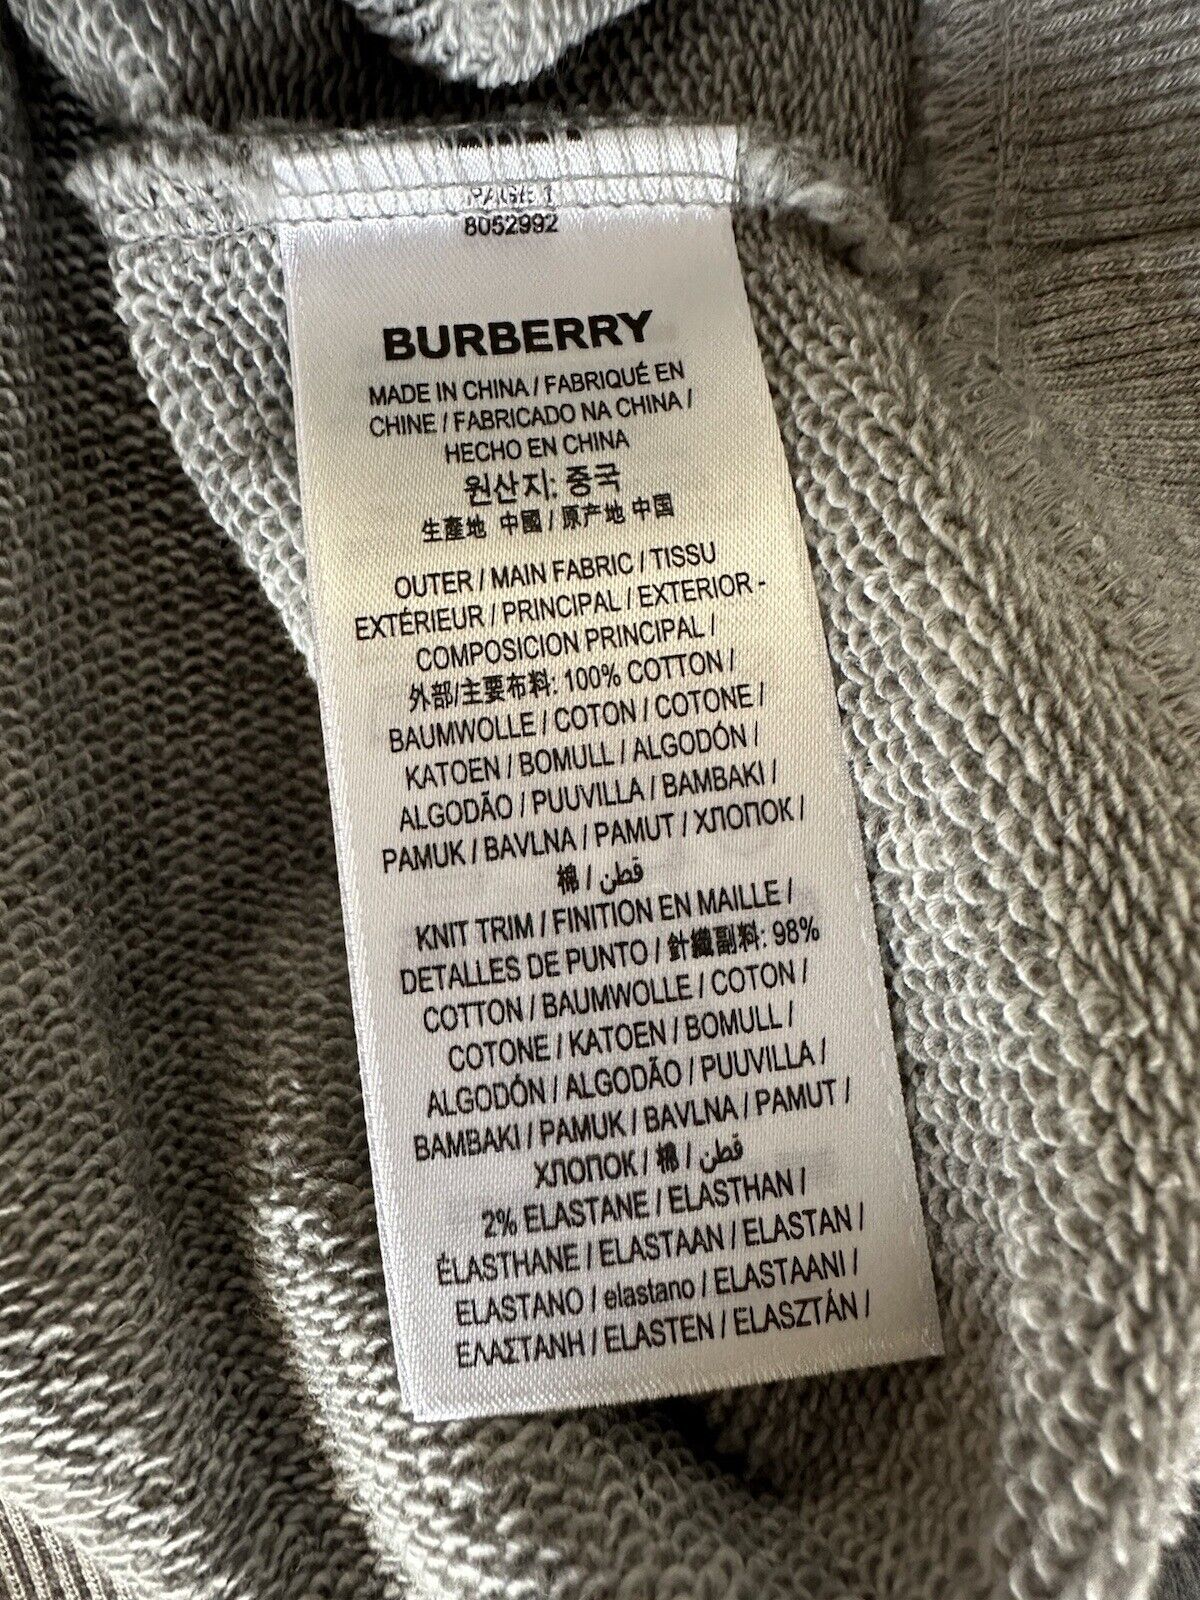 NWT $680 Burberry Fawson Pale Grey Sweatshirt 2XL 8052992 (Oversized)